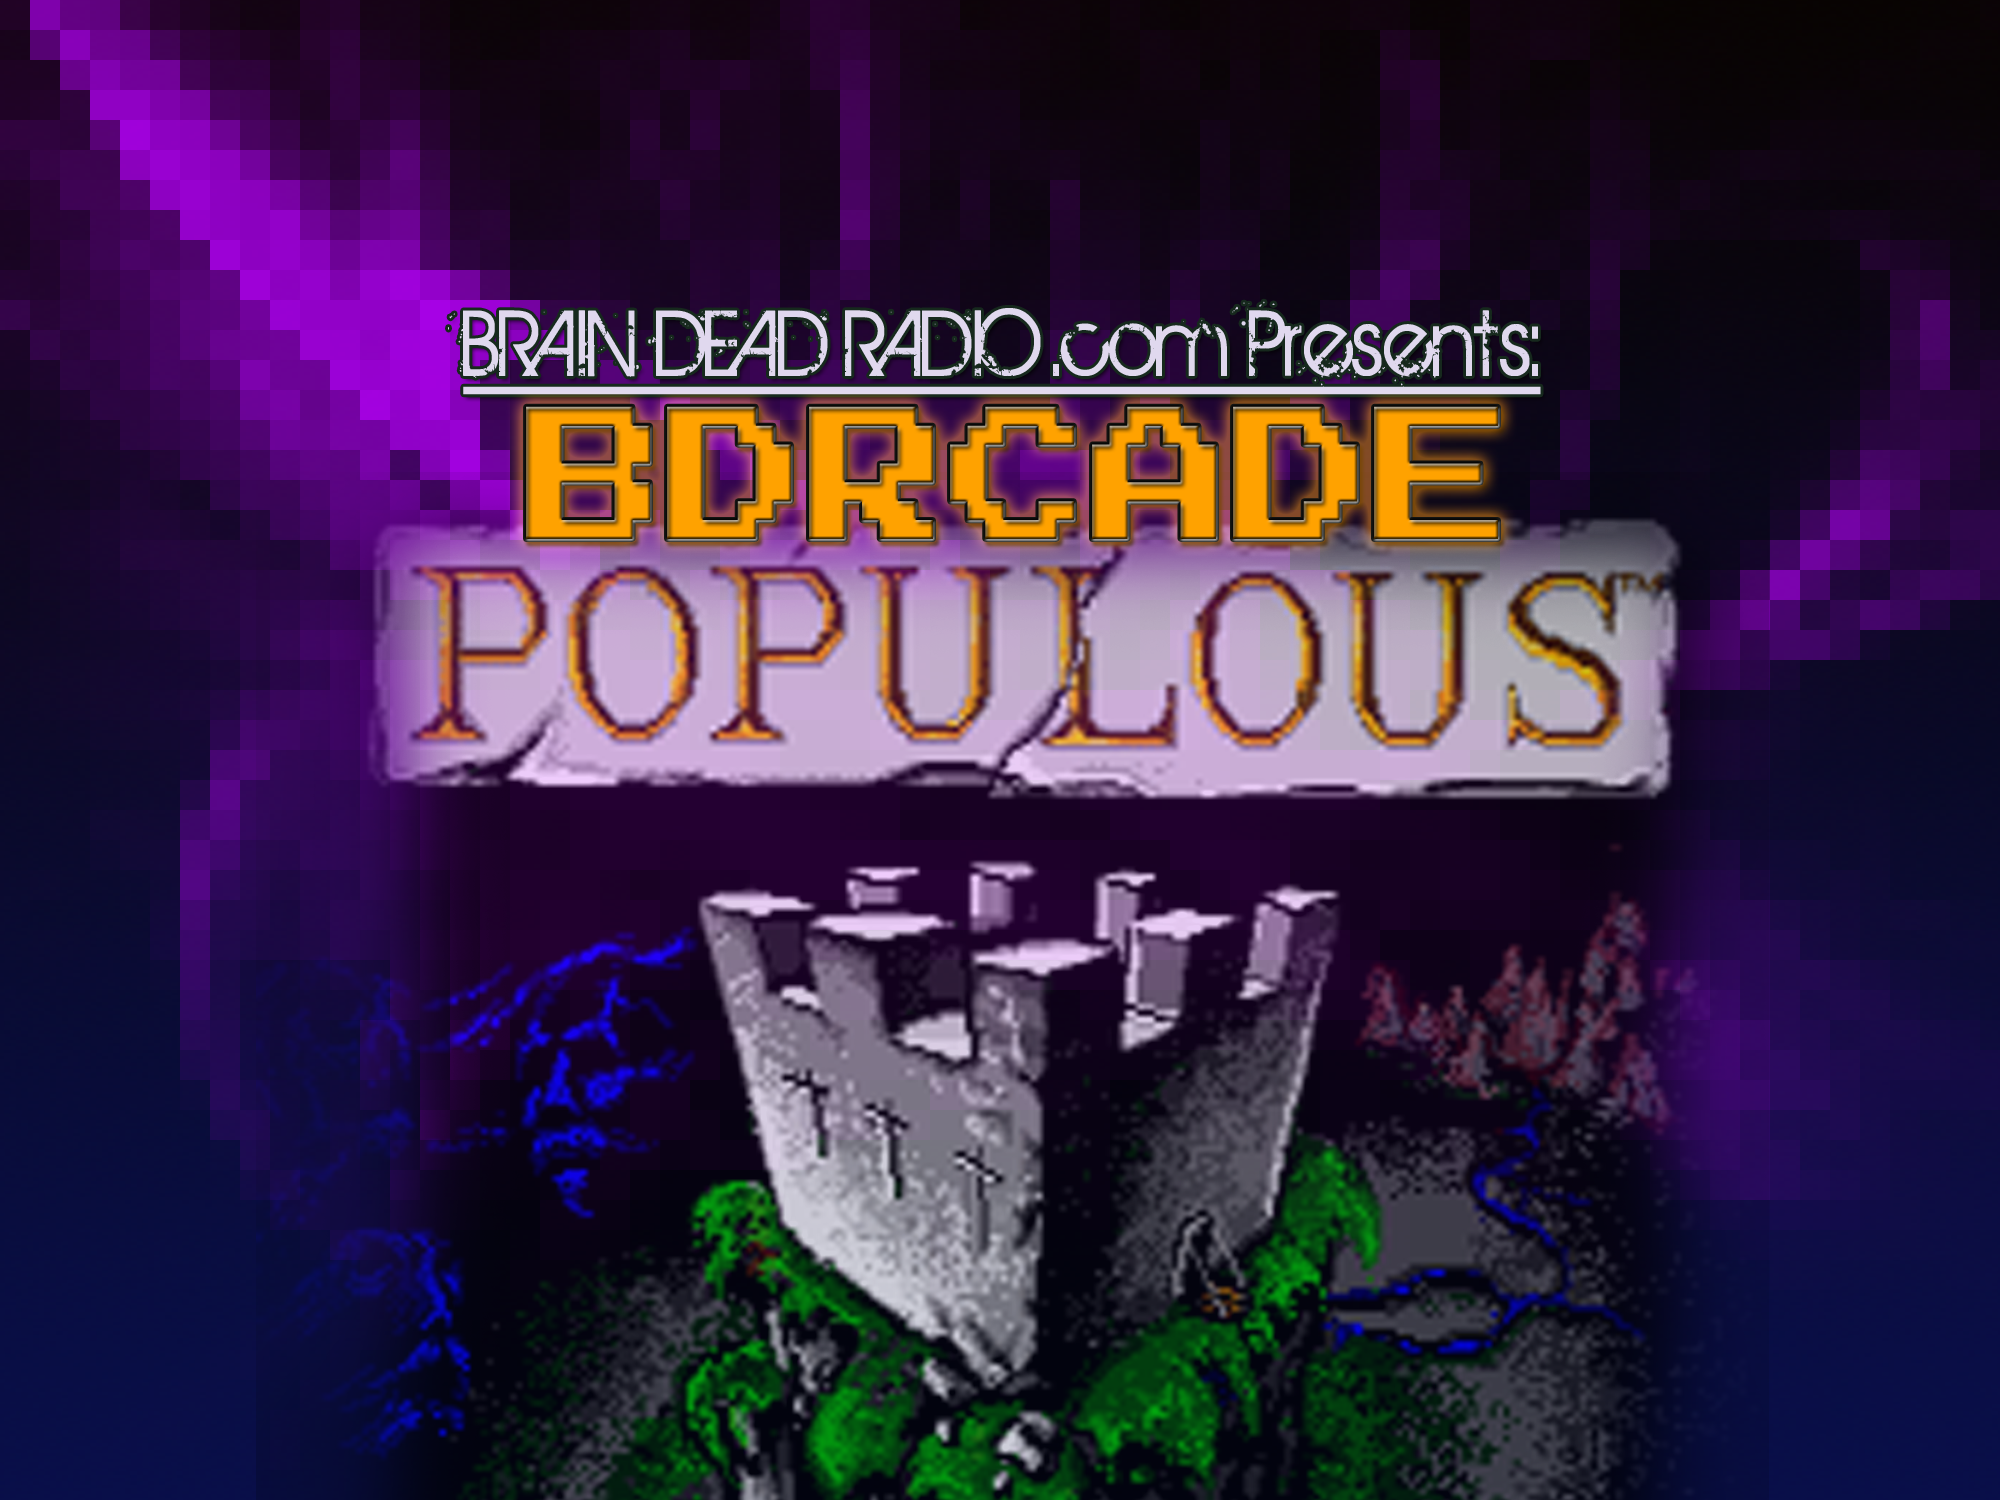 Populous – BDRcade